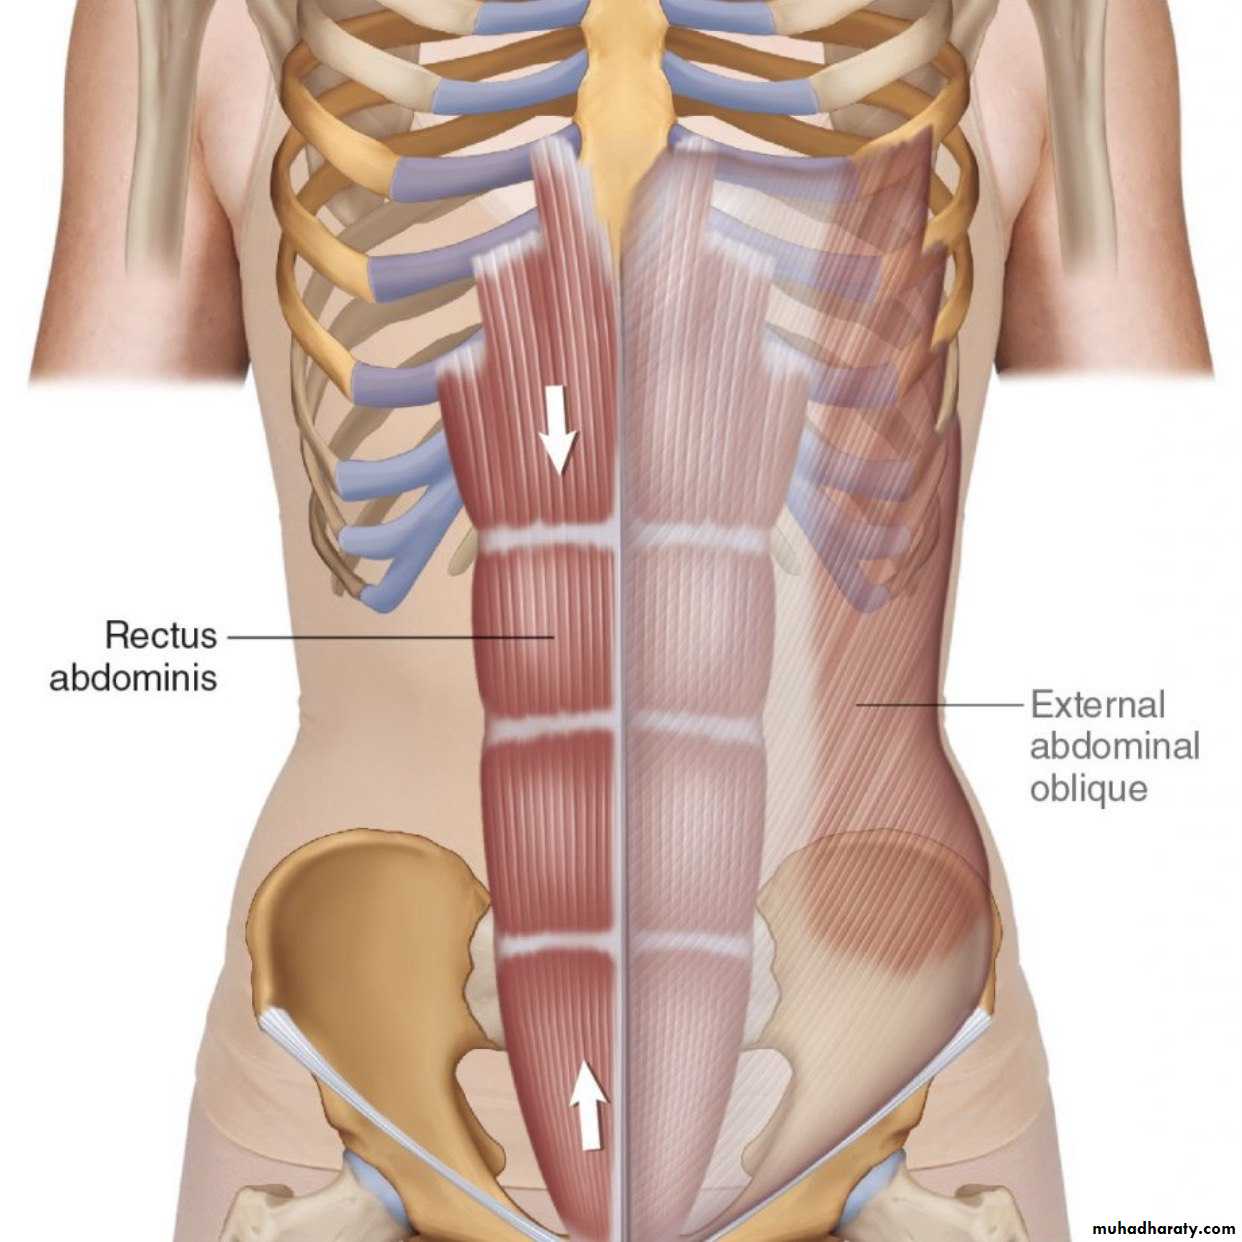 Сильные мышцы живота. Анатомия живота. Rectus abdominis мышца. Transversus abdominis. M obliquus externus abdominis.